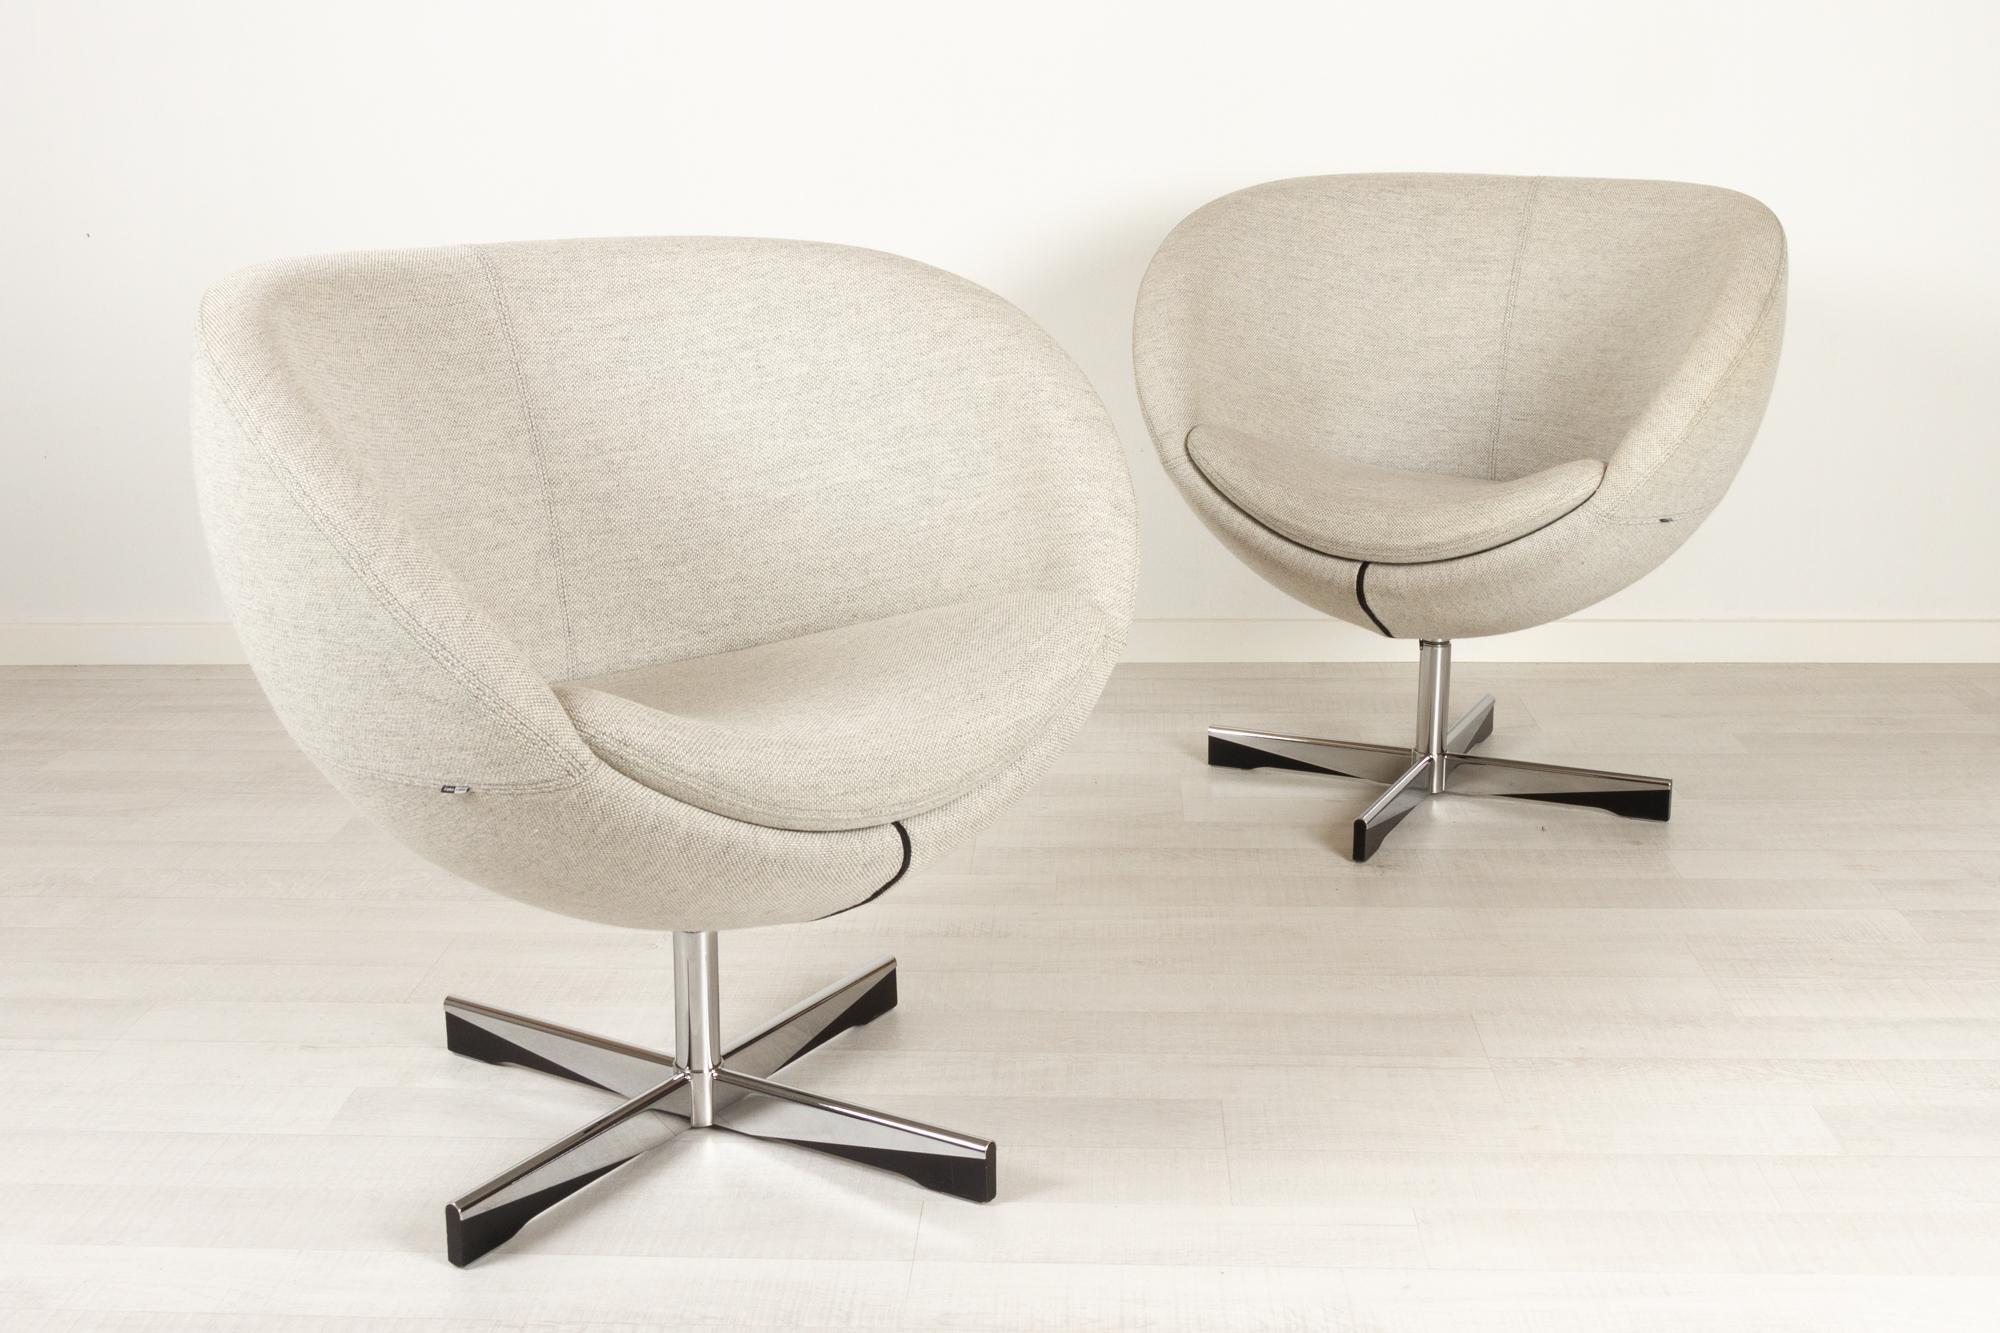 Norwegian Pair of Scandinavian Modern Lounge Chairs by Sven Ivar Dysthe, 21st Century